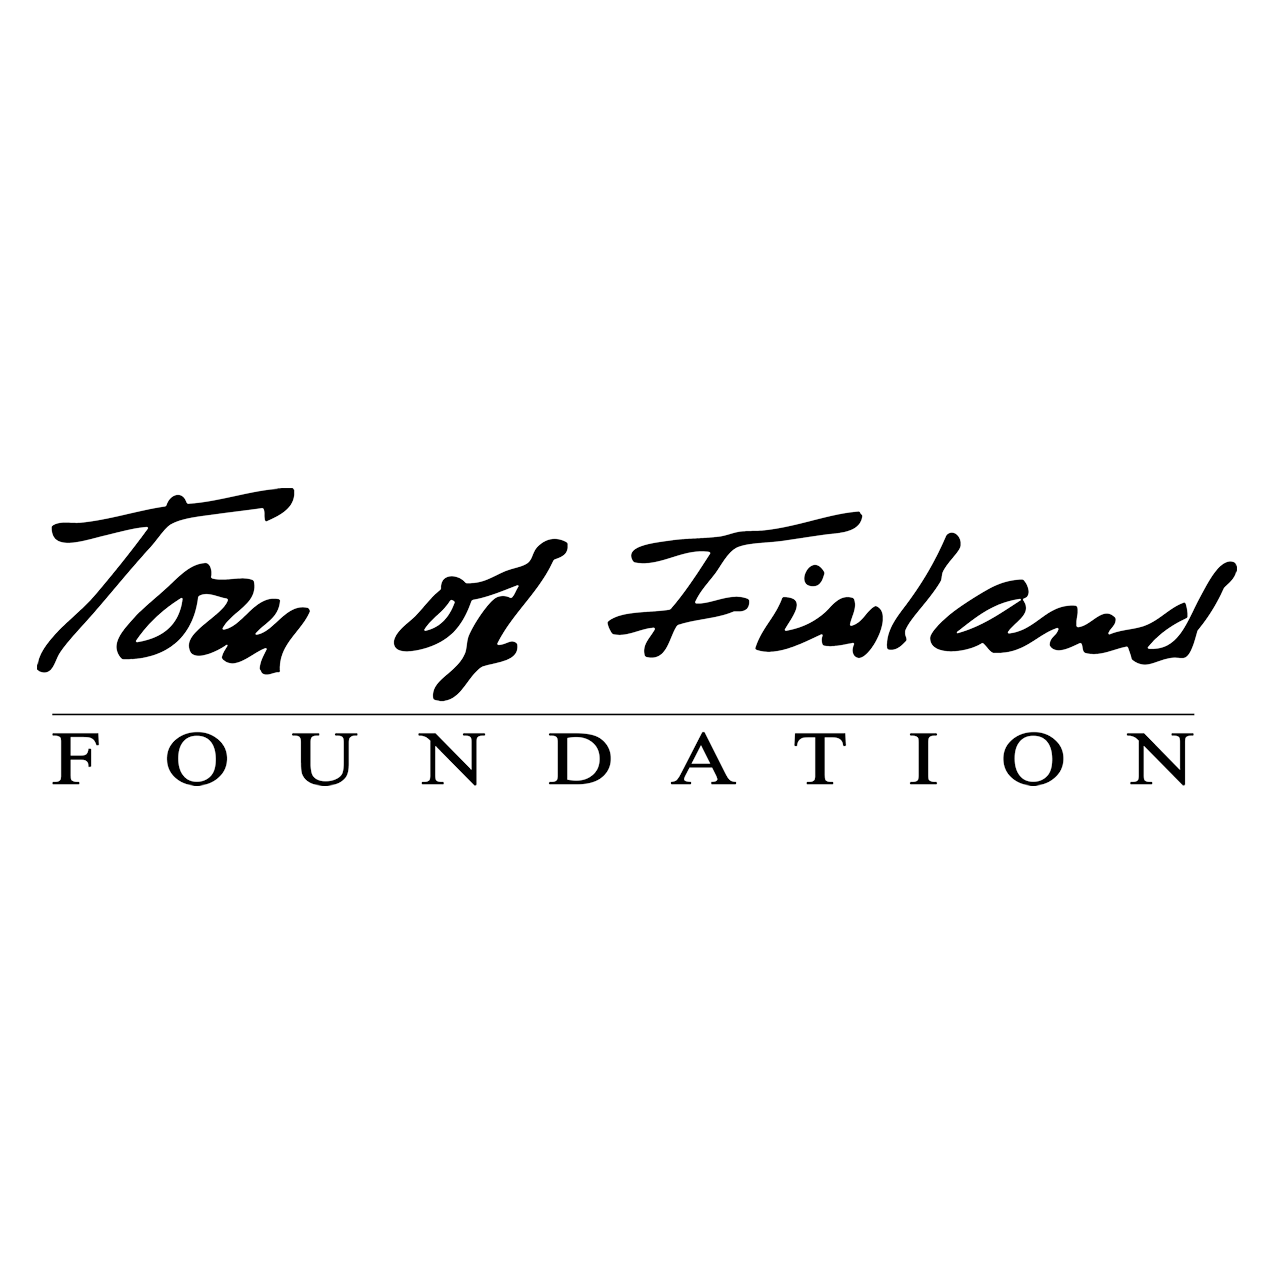 Tom of Finland Foundation